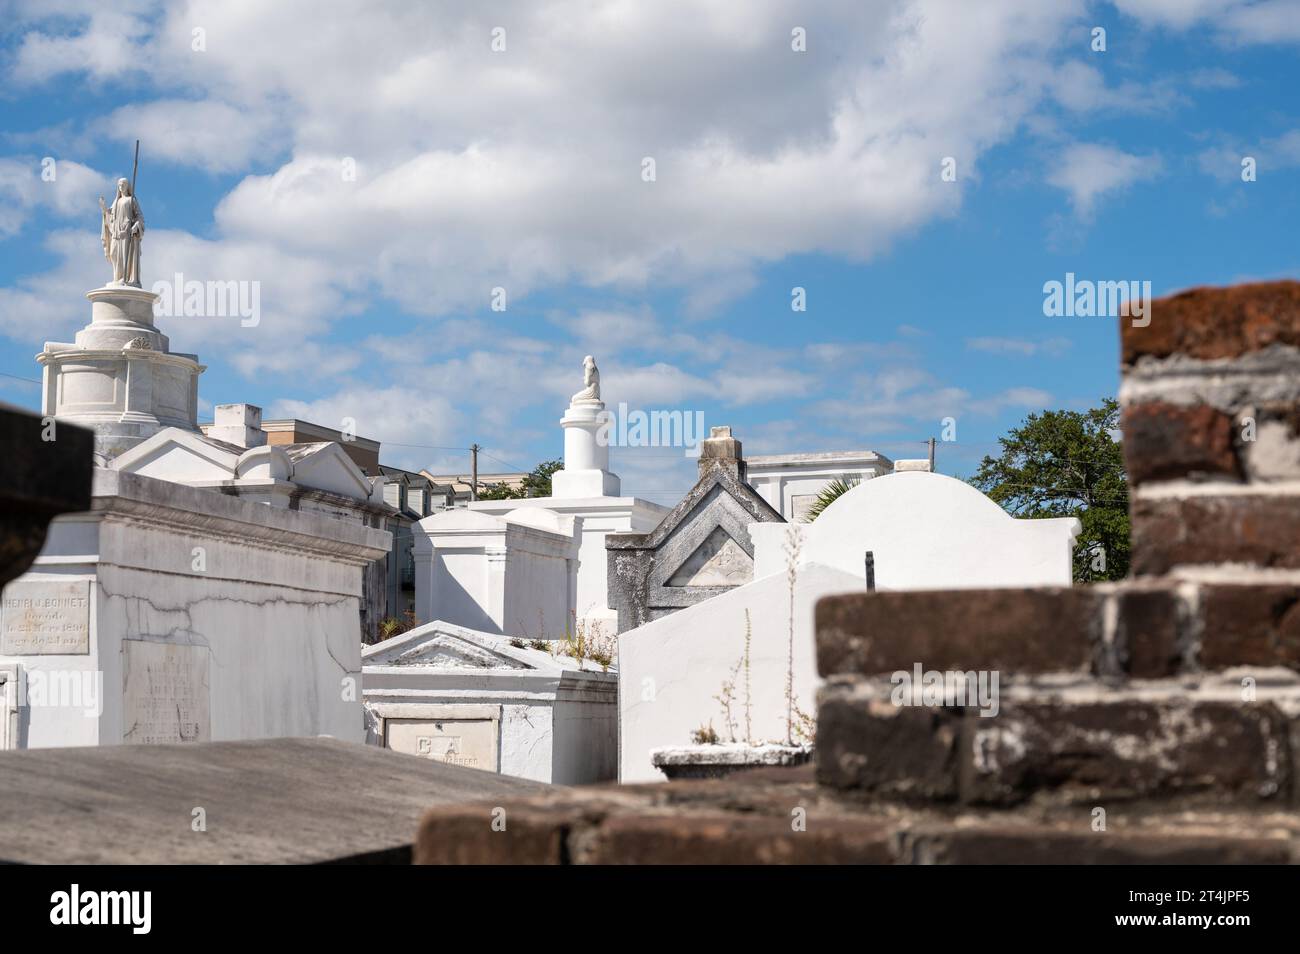 St Louis Cemetery No. 1, New Orleans, Louisiana, USA. Stock Photo